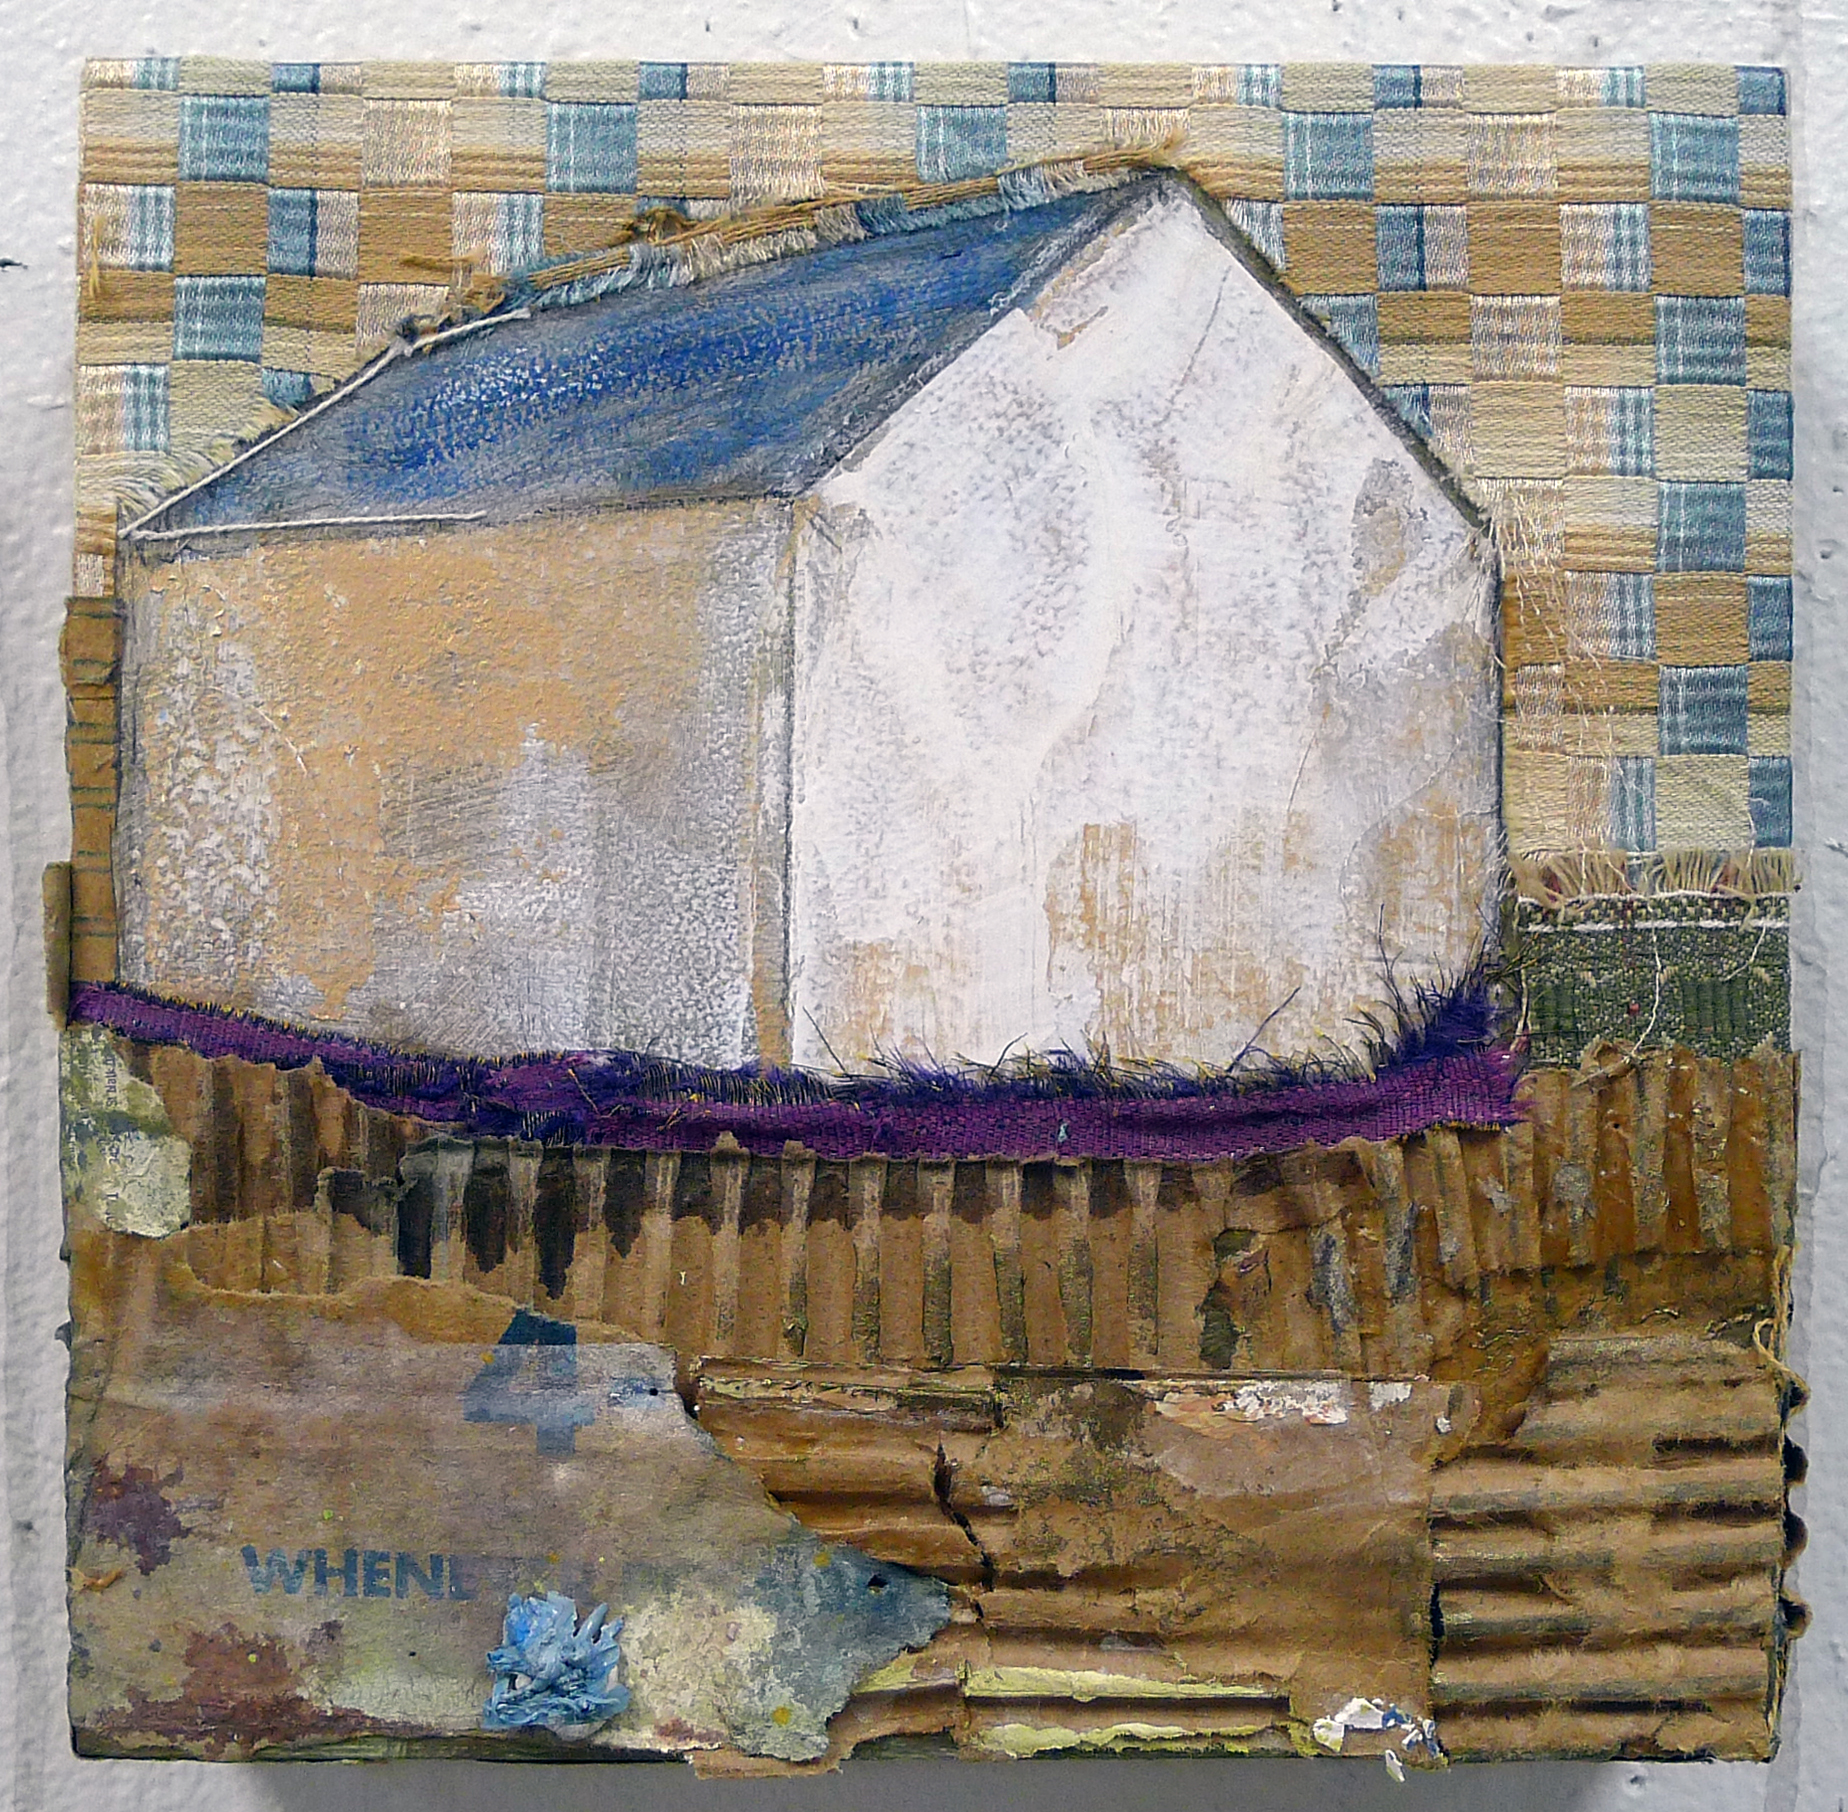  Brenda Cirioni,  Barn Series: Whenever,&nbsp; Mixed media painting, 8x8 